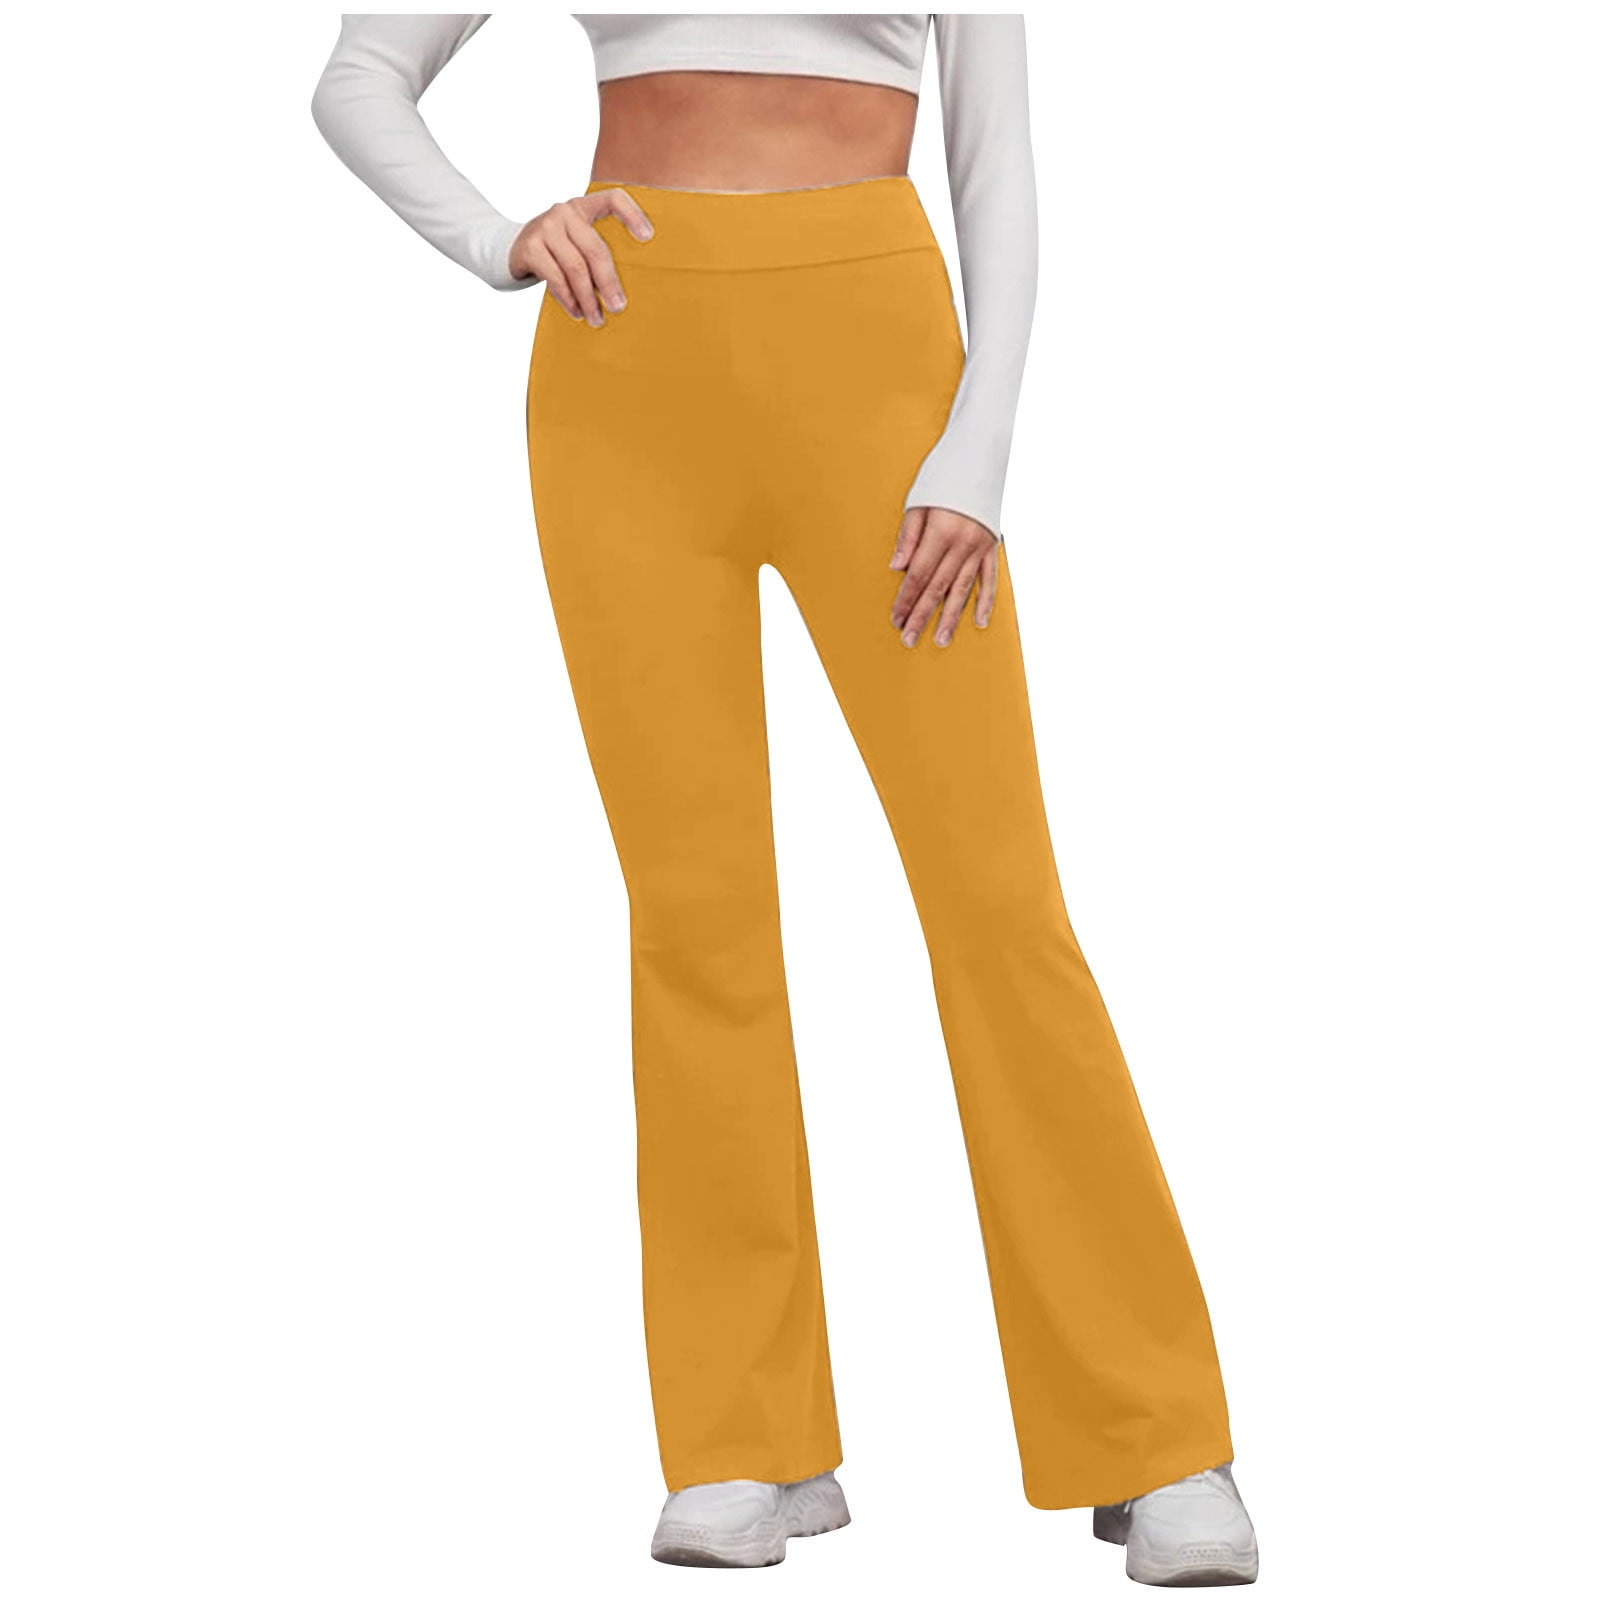 Black and Friday Deals Blueek Women Fashion Casual Solid Pocket Leggings  Sports Nine-Point Yoga Pants - Walmart.com